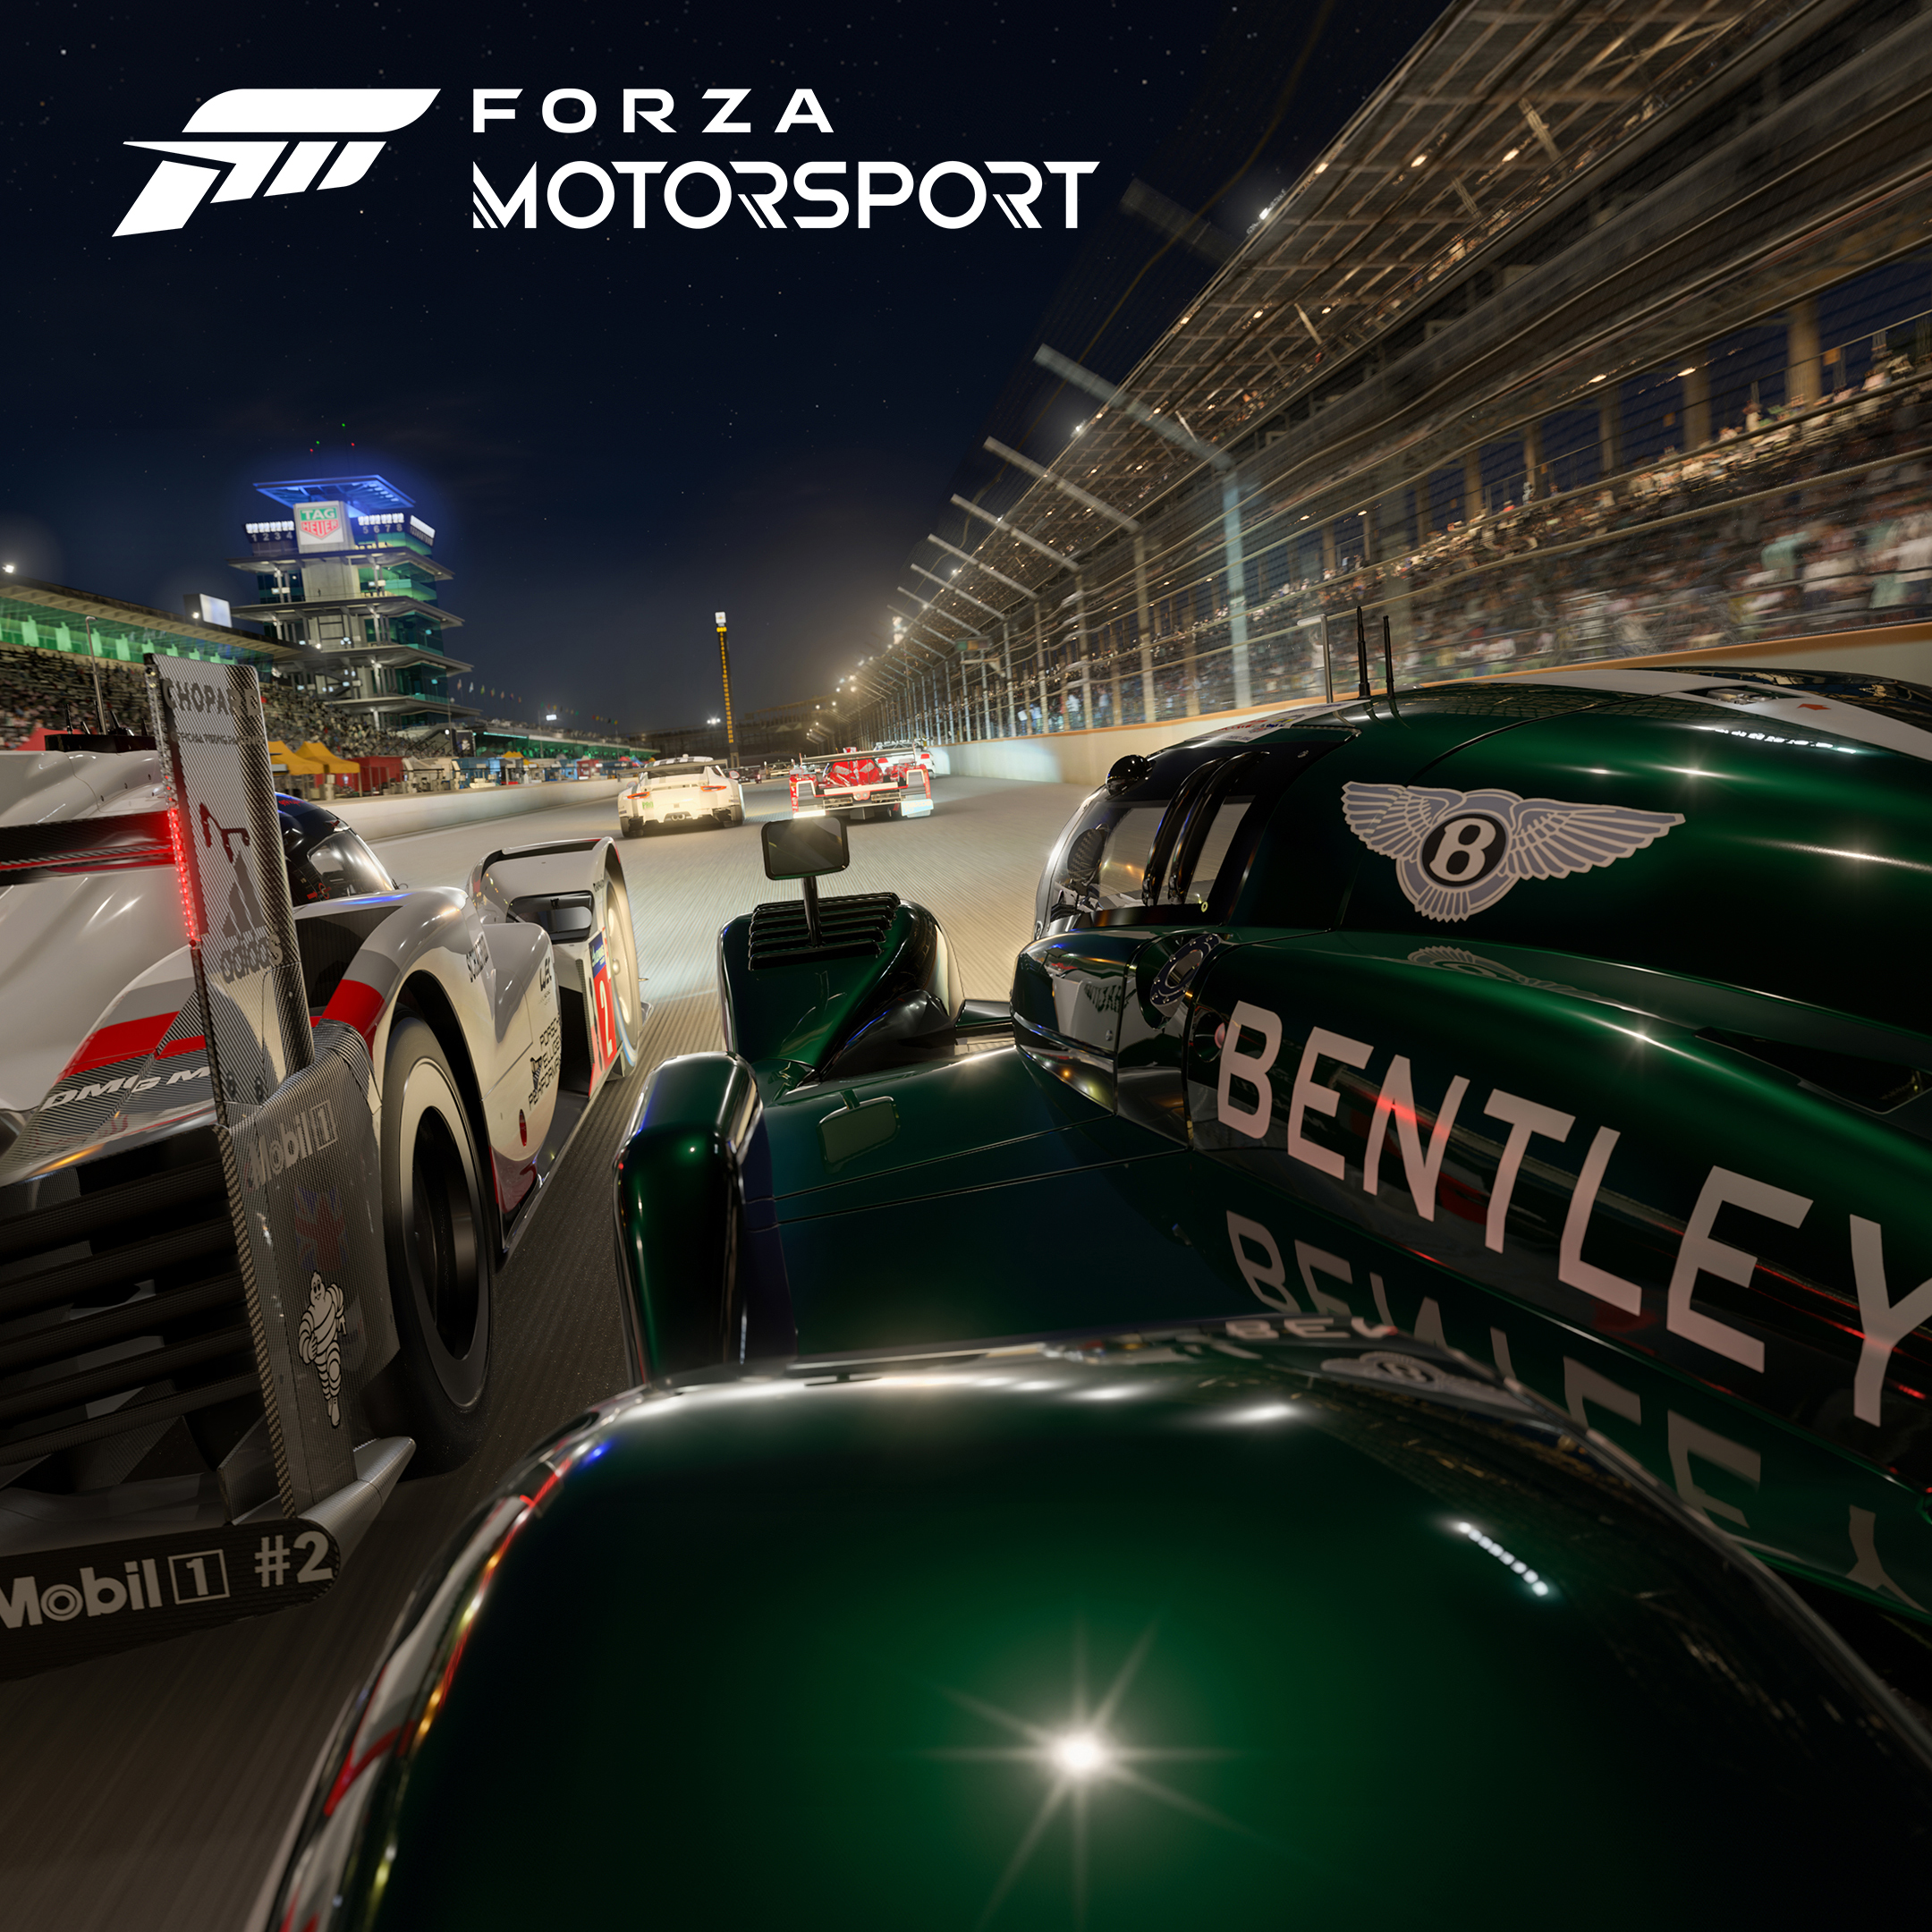 Forza Motorsport Preloading Begins: Massive Storage Requirements Revealed